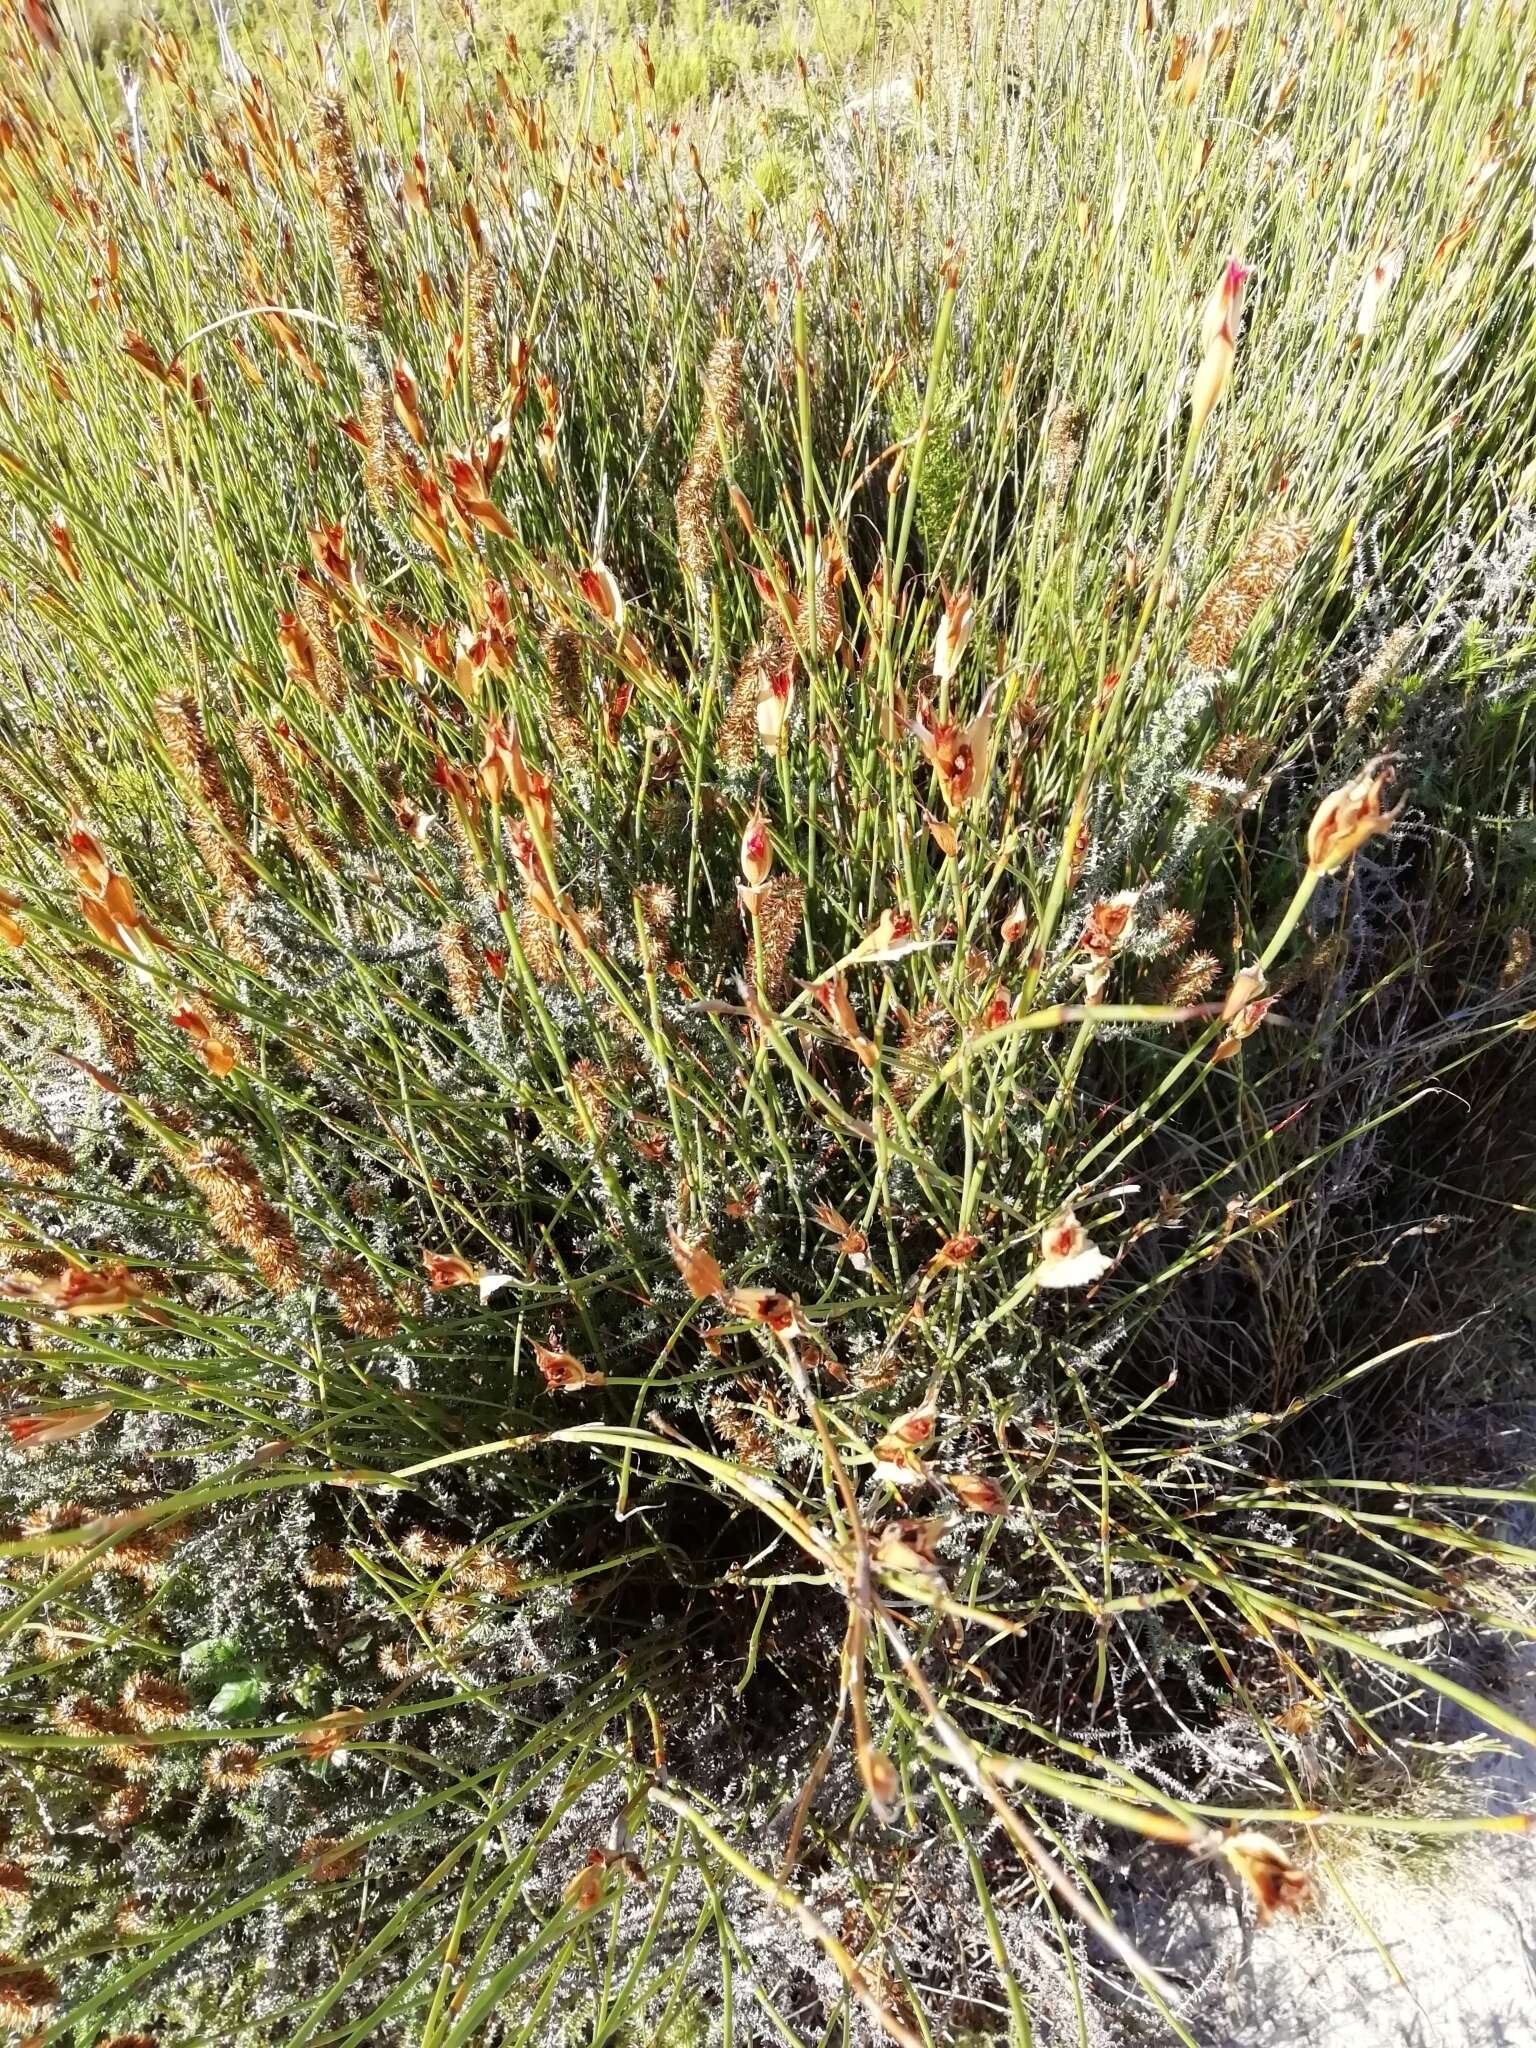 Image of Willdenowia glomerata (Thunb.) H. P. Linder